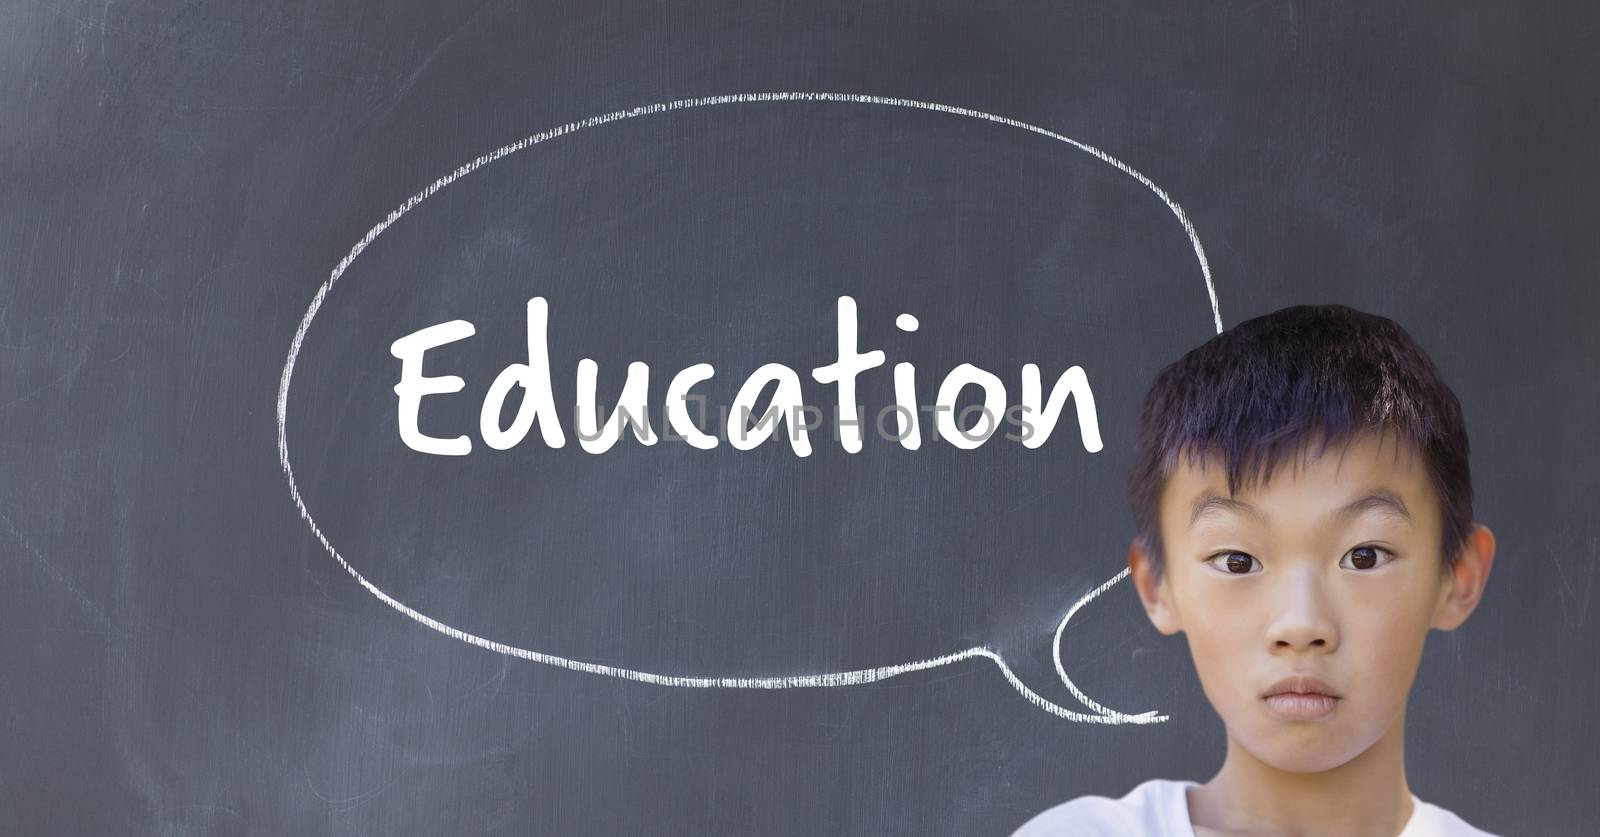 Boy and Education text in speech bubbles by Wavebreakmedia